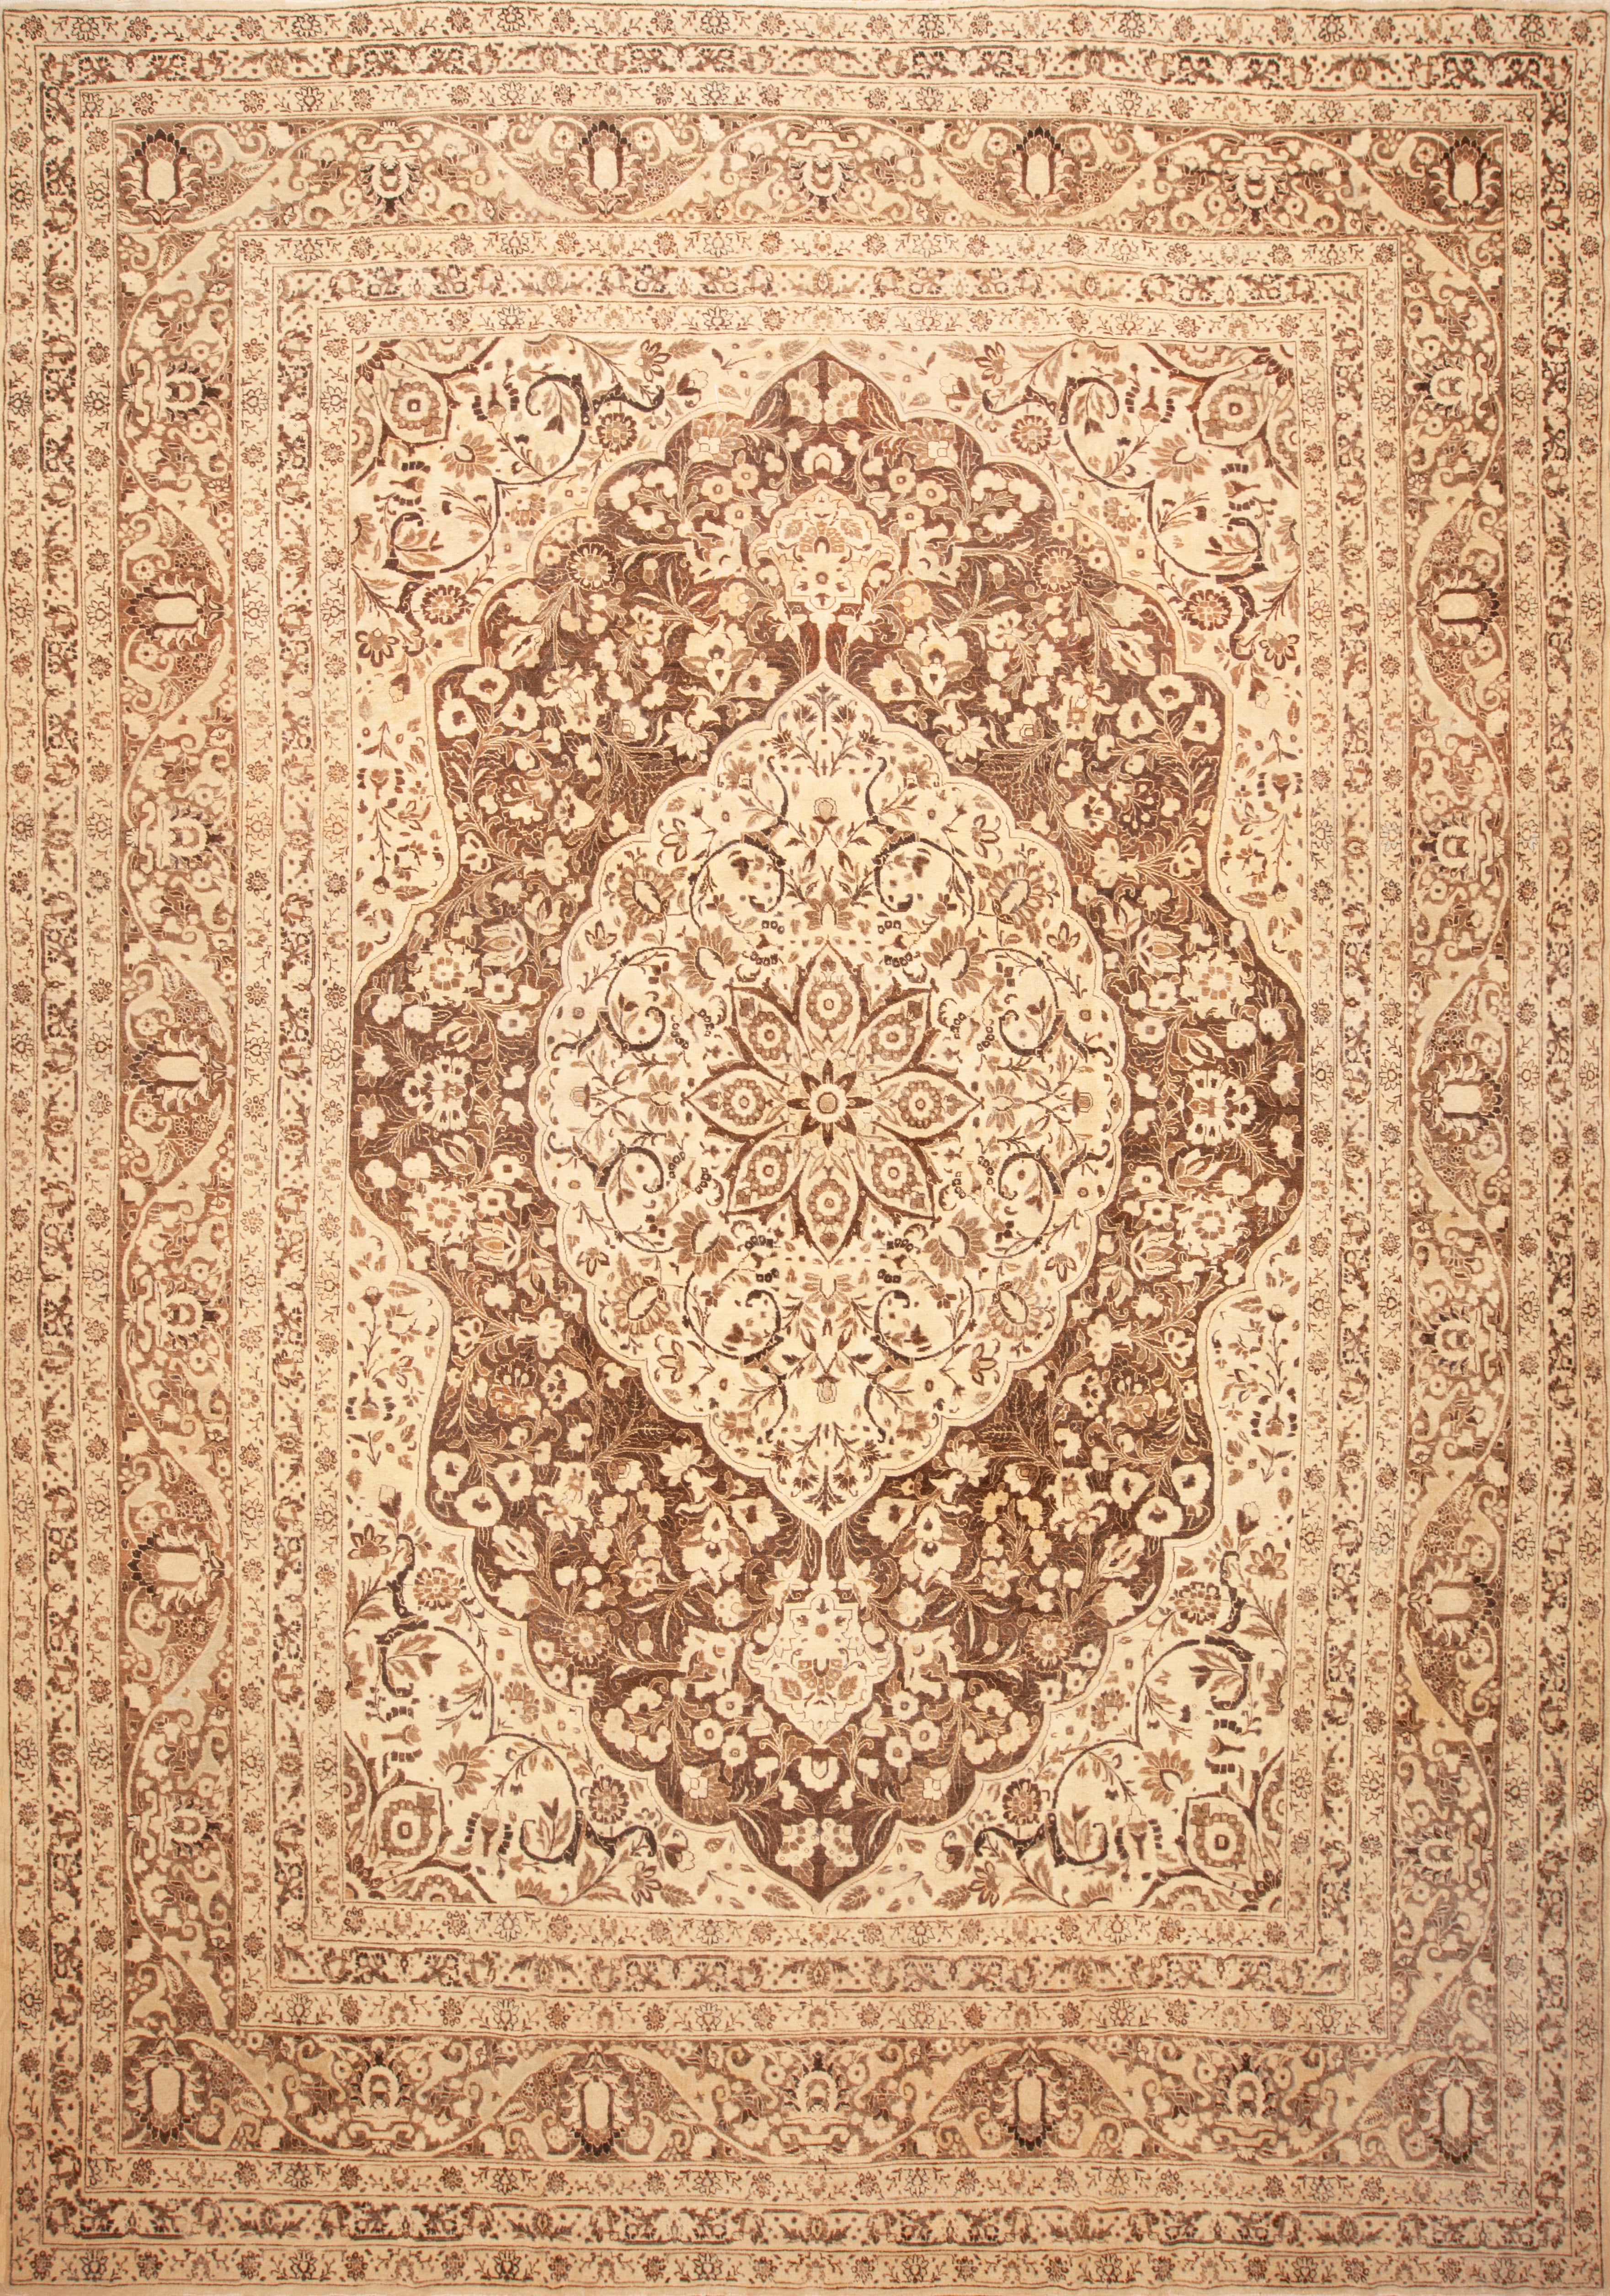 Antique Persian Tabriz Rug. Size: 12 ft x 18 ft For Sale